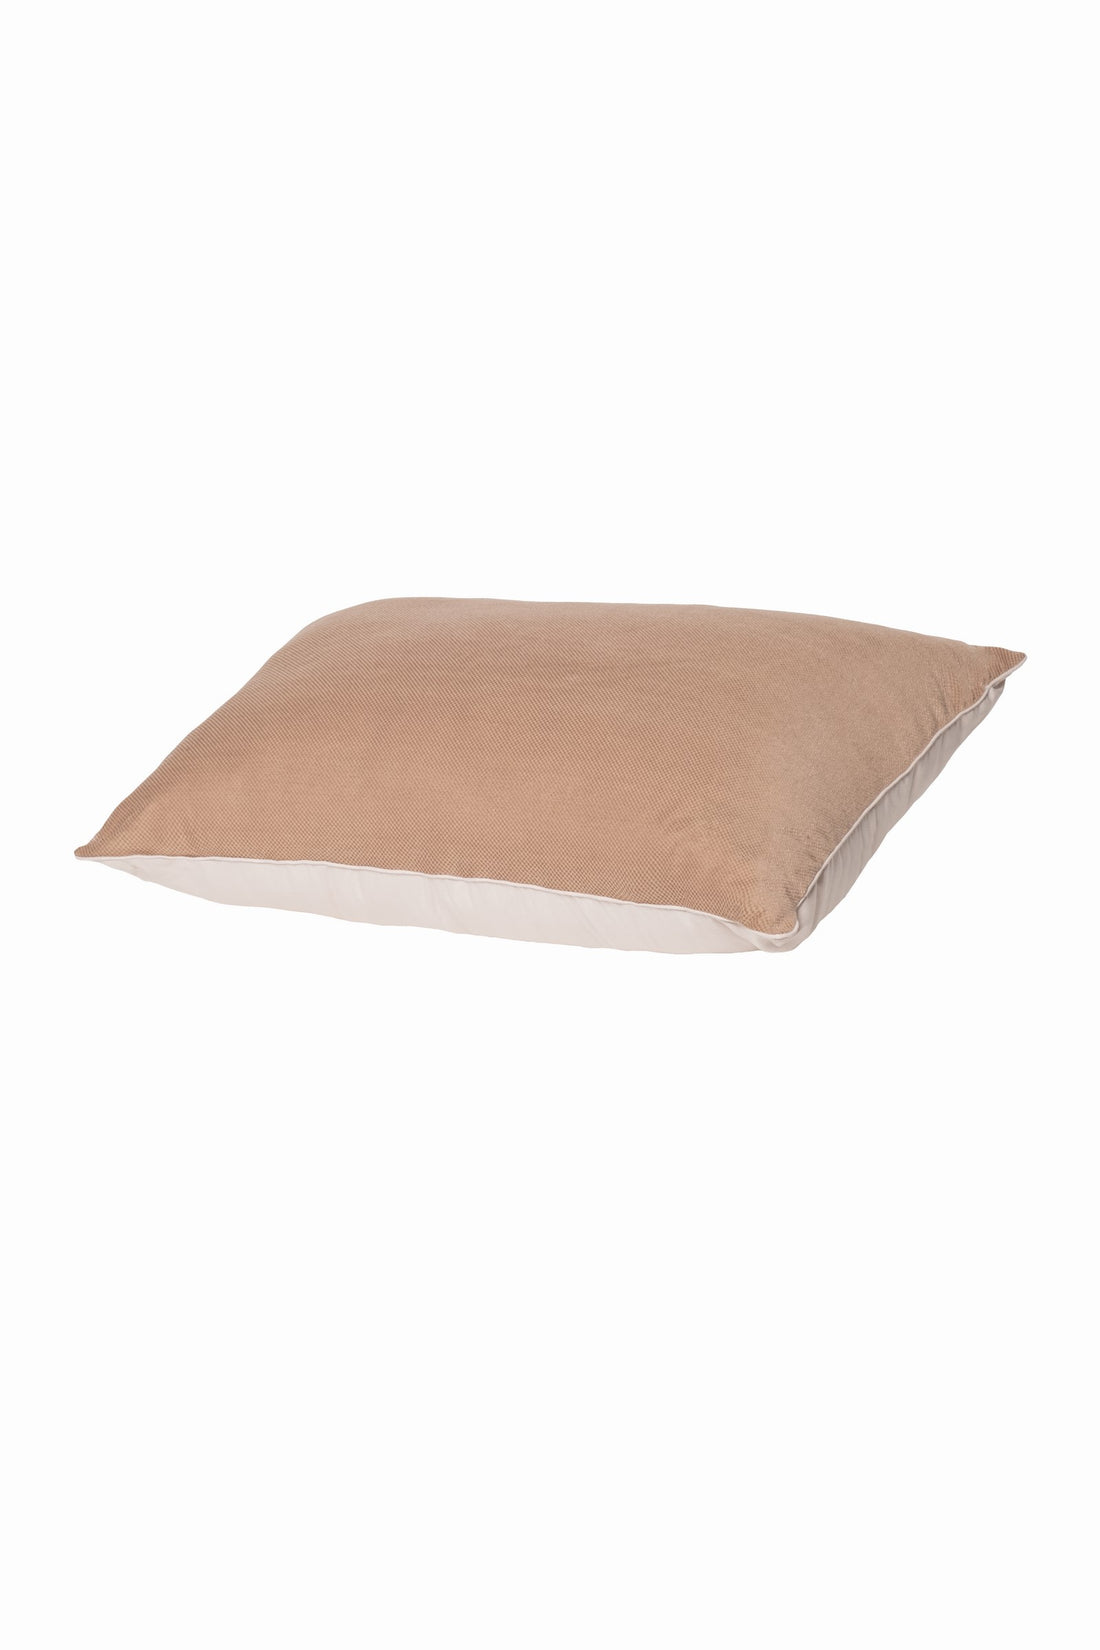 Cotton Box Utka Pillow Beige 50x70